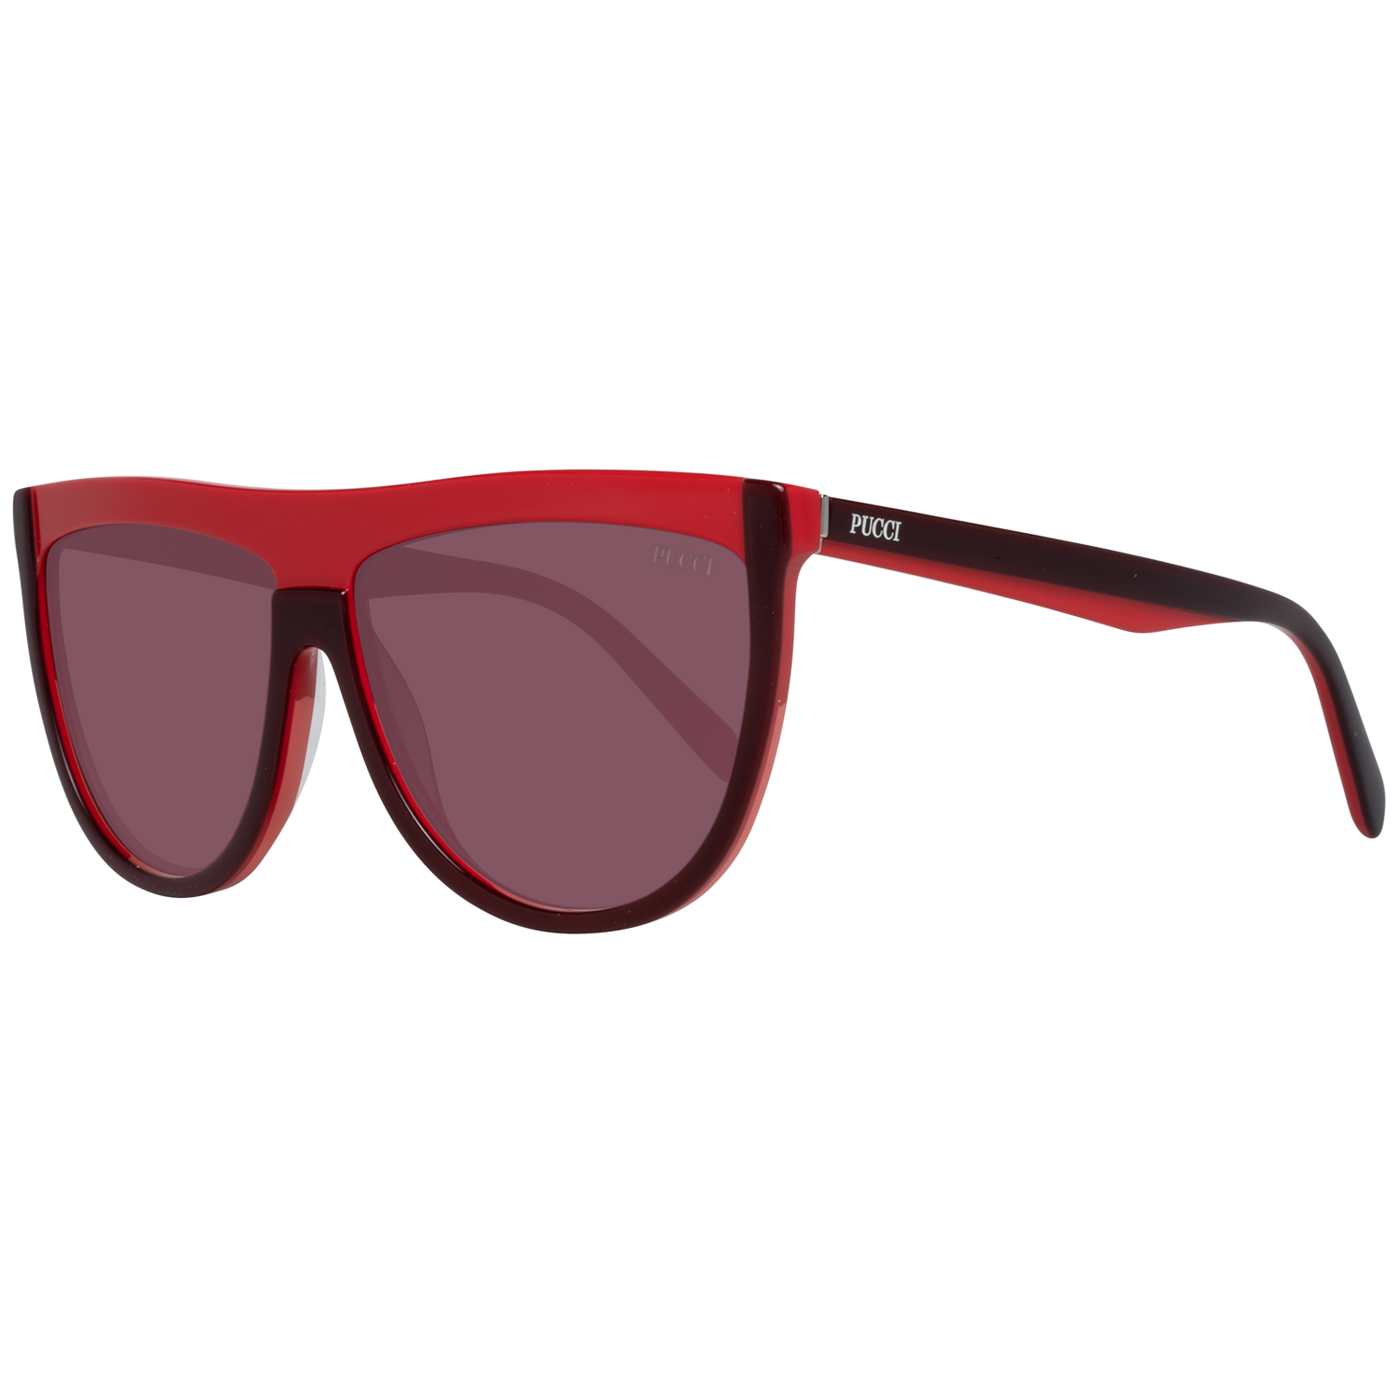 Emilio Pucci Burgundy Women Sunglasses